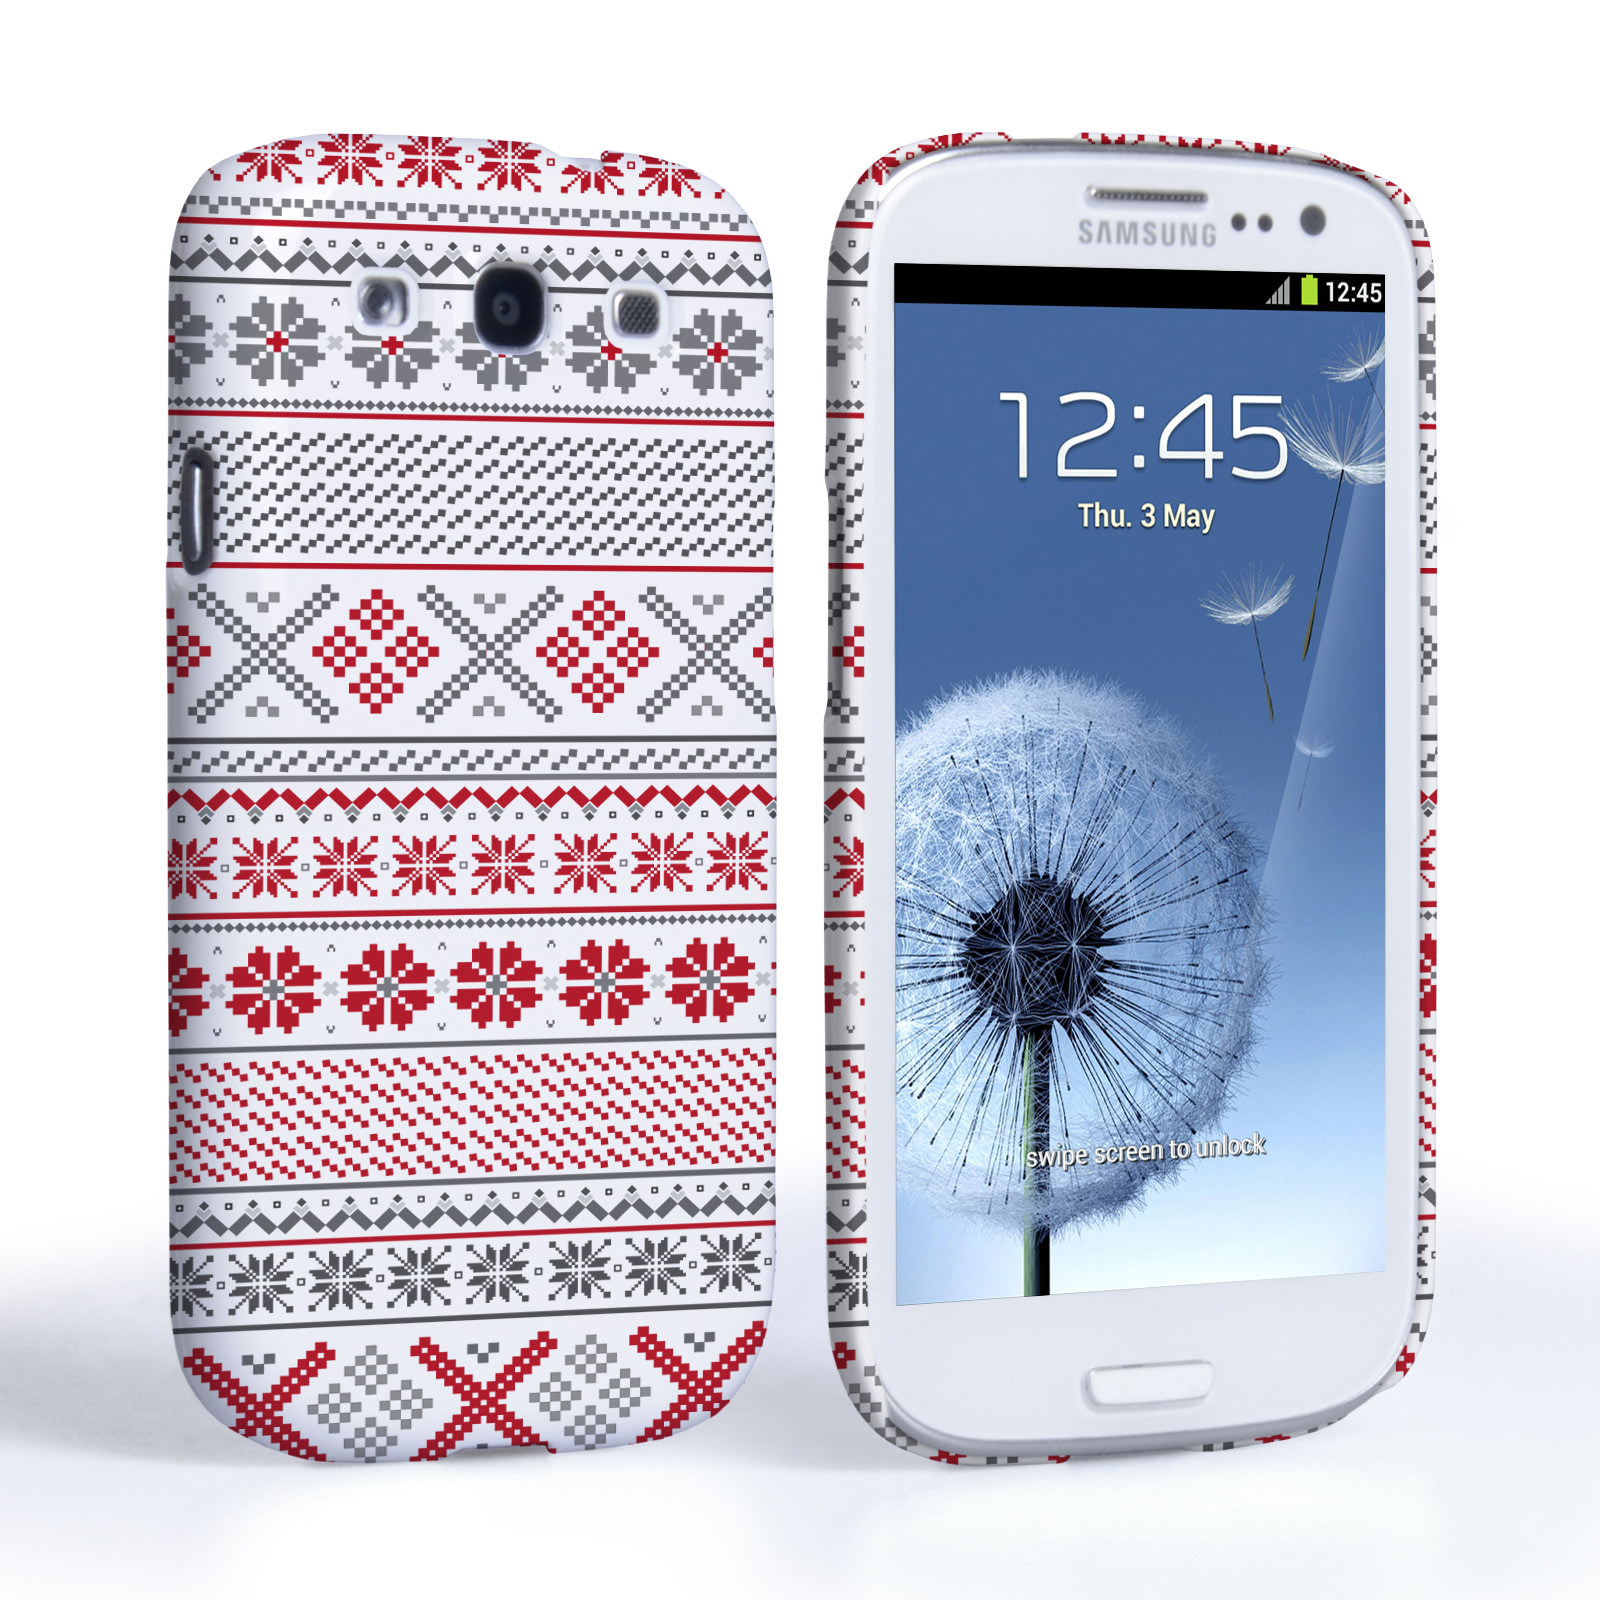 Caseflex Samsung Galaxy S3 Fairisle Case – Red, White and Grey